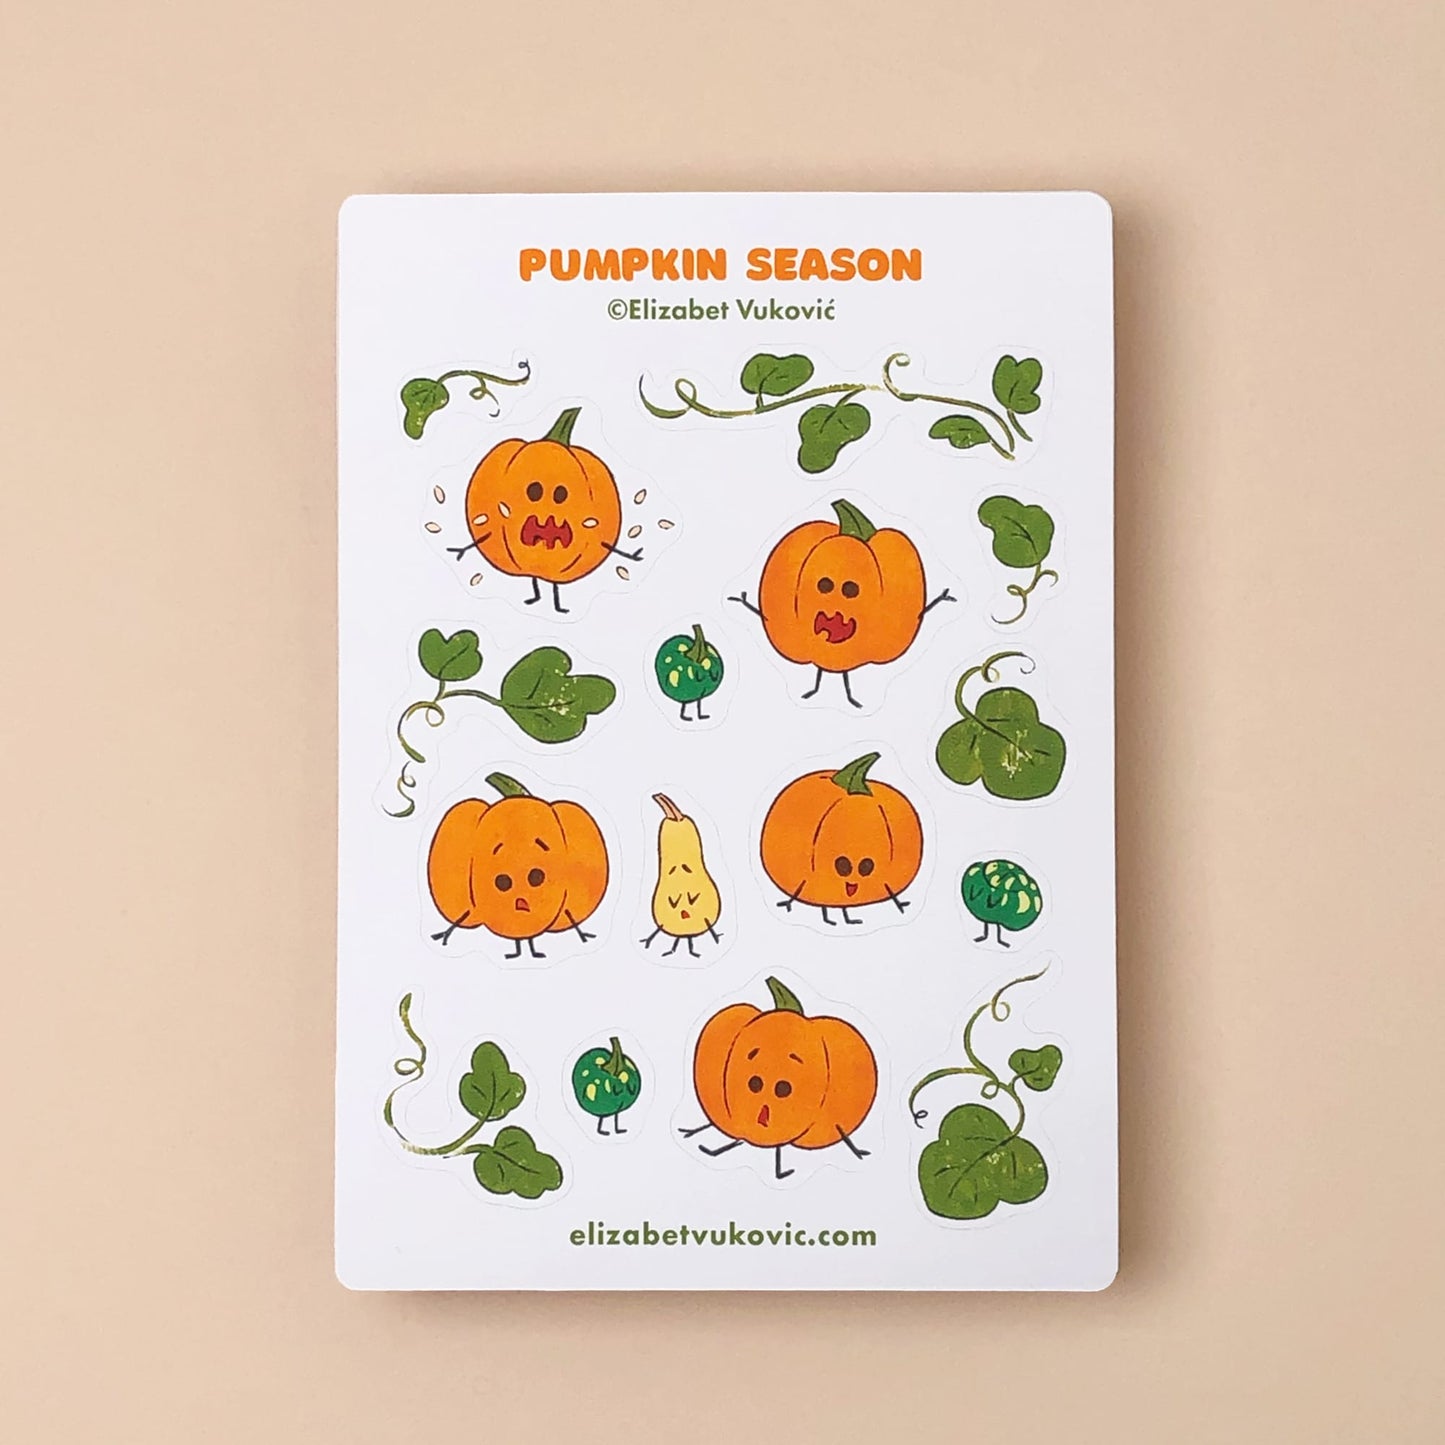 Pumpkin-themed sticker sheet titled Pumpkin Season by Elizabet Vukovic features illustrated pumpkins and leaves.